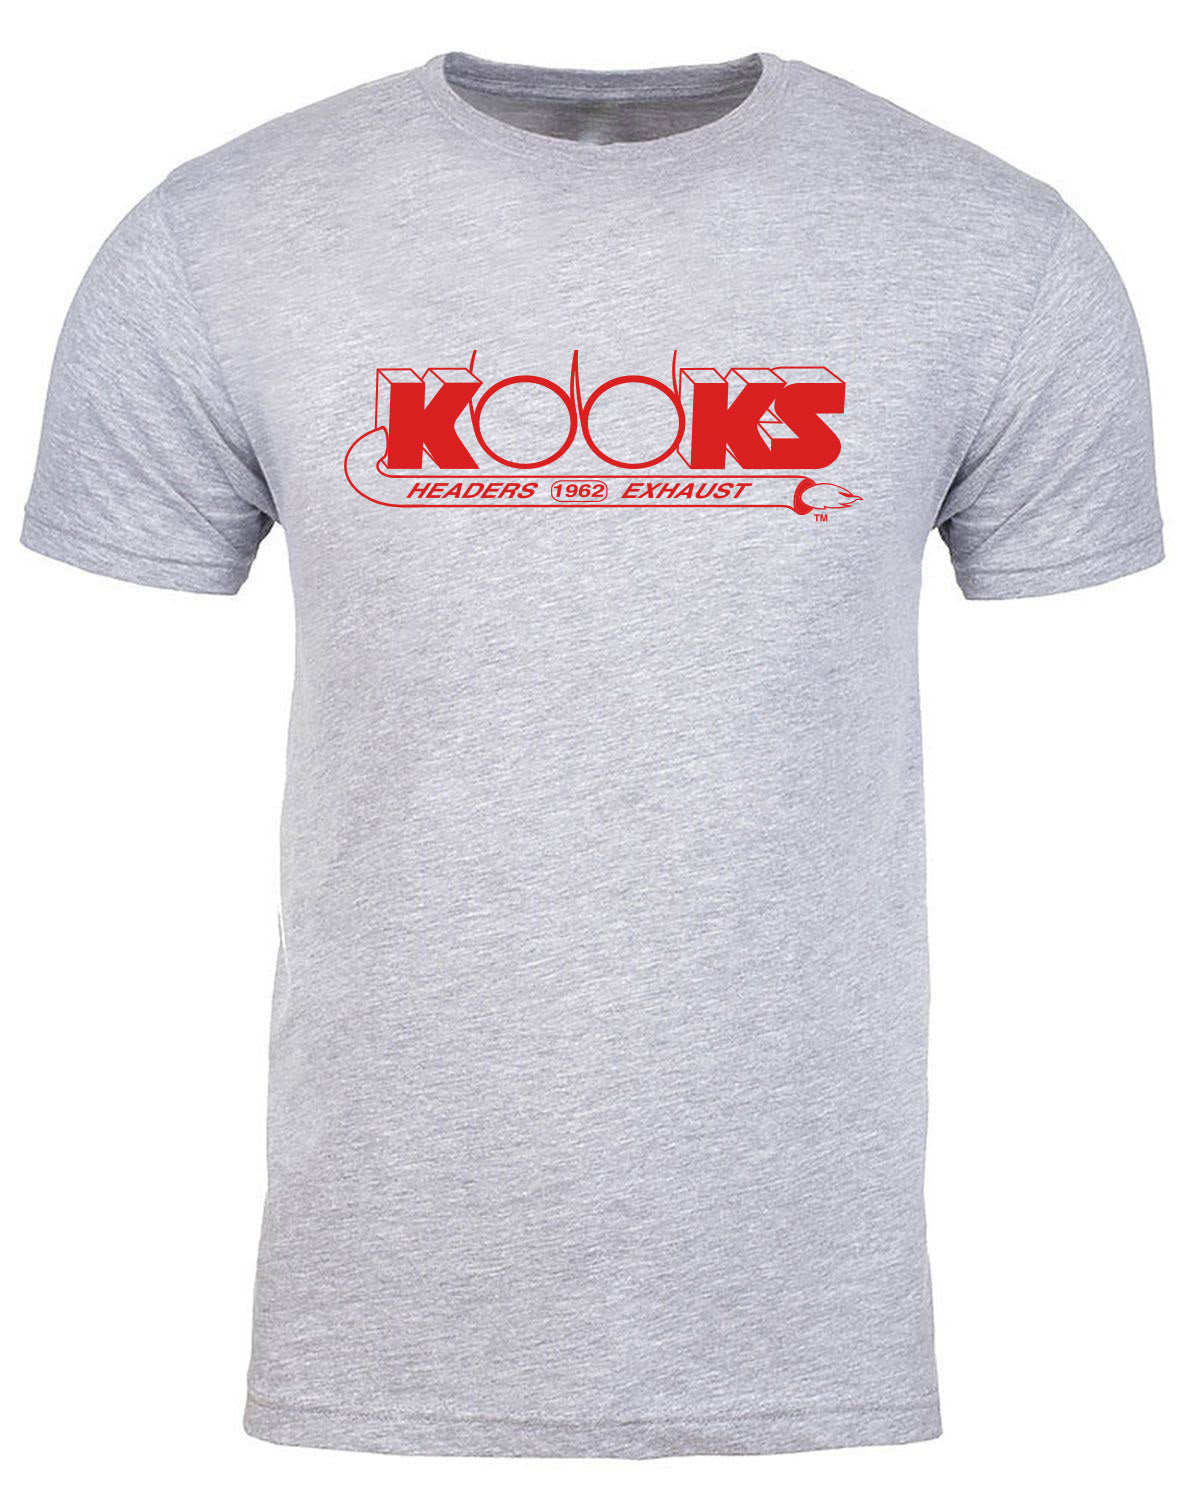 Kooks Custom Headers T-Shirt TS-100648-03